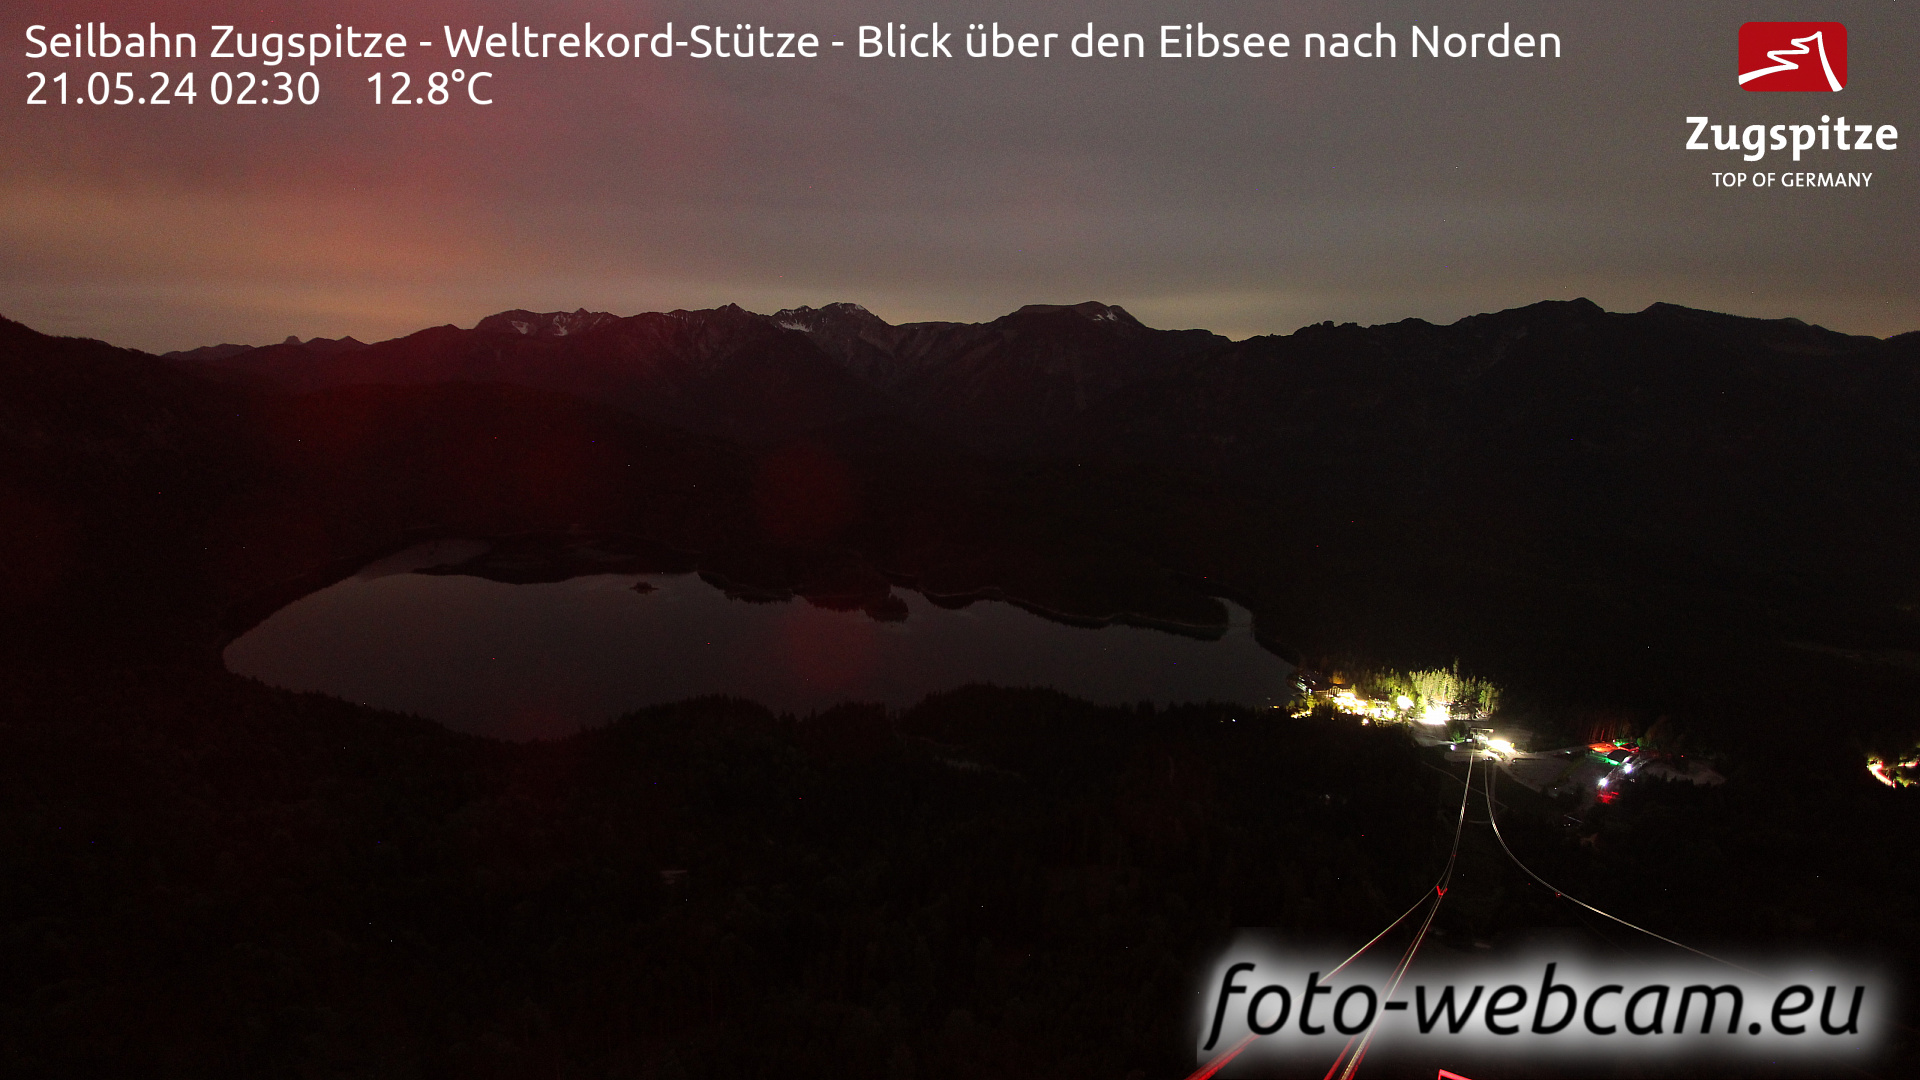 Zugspitze Ons. 02:49